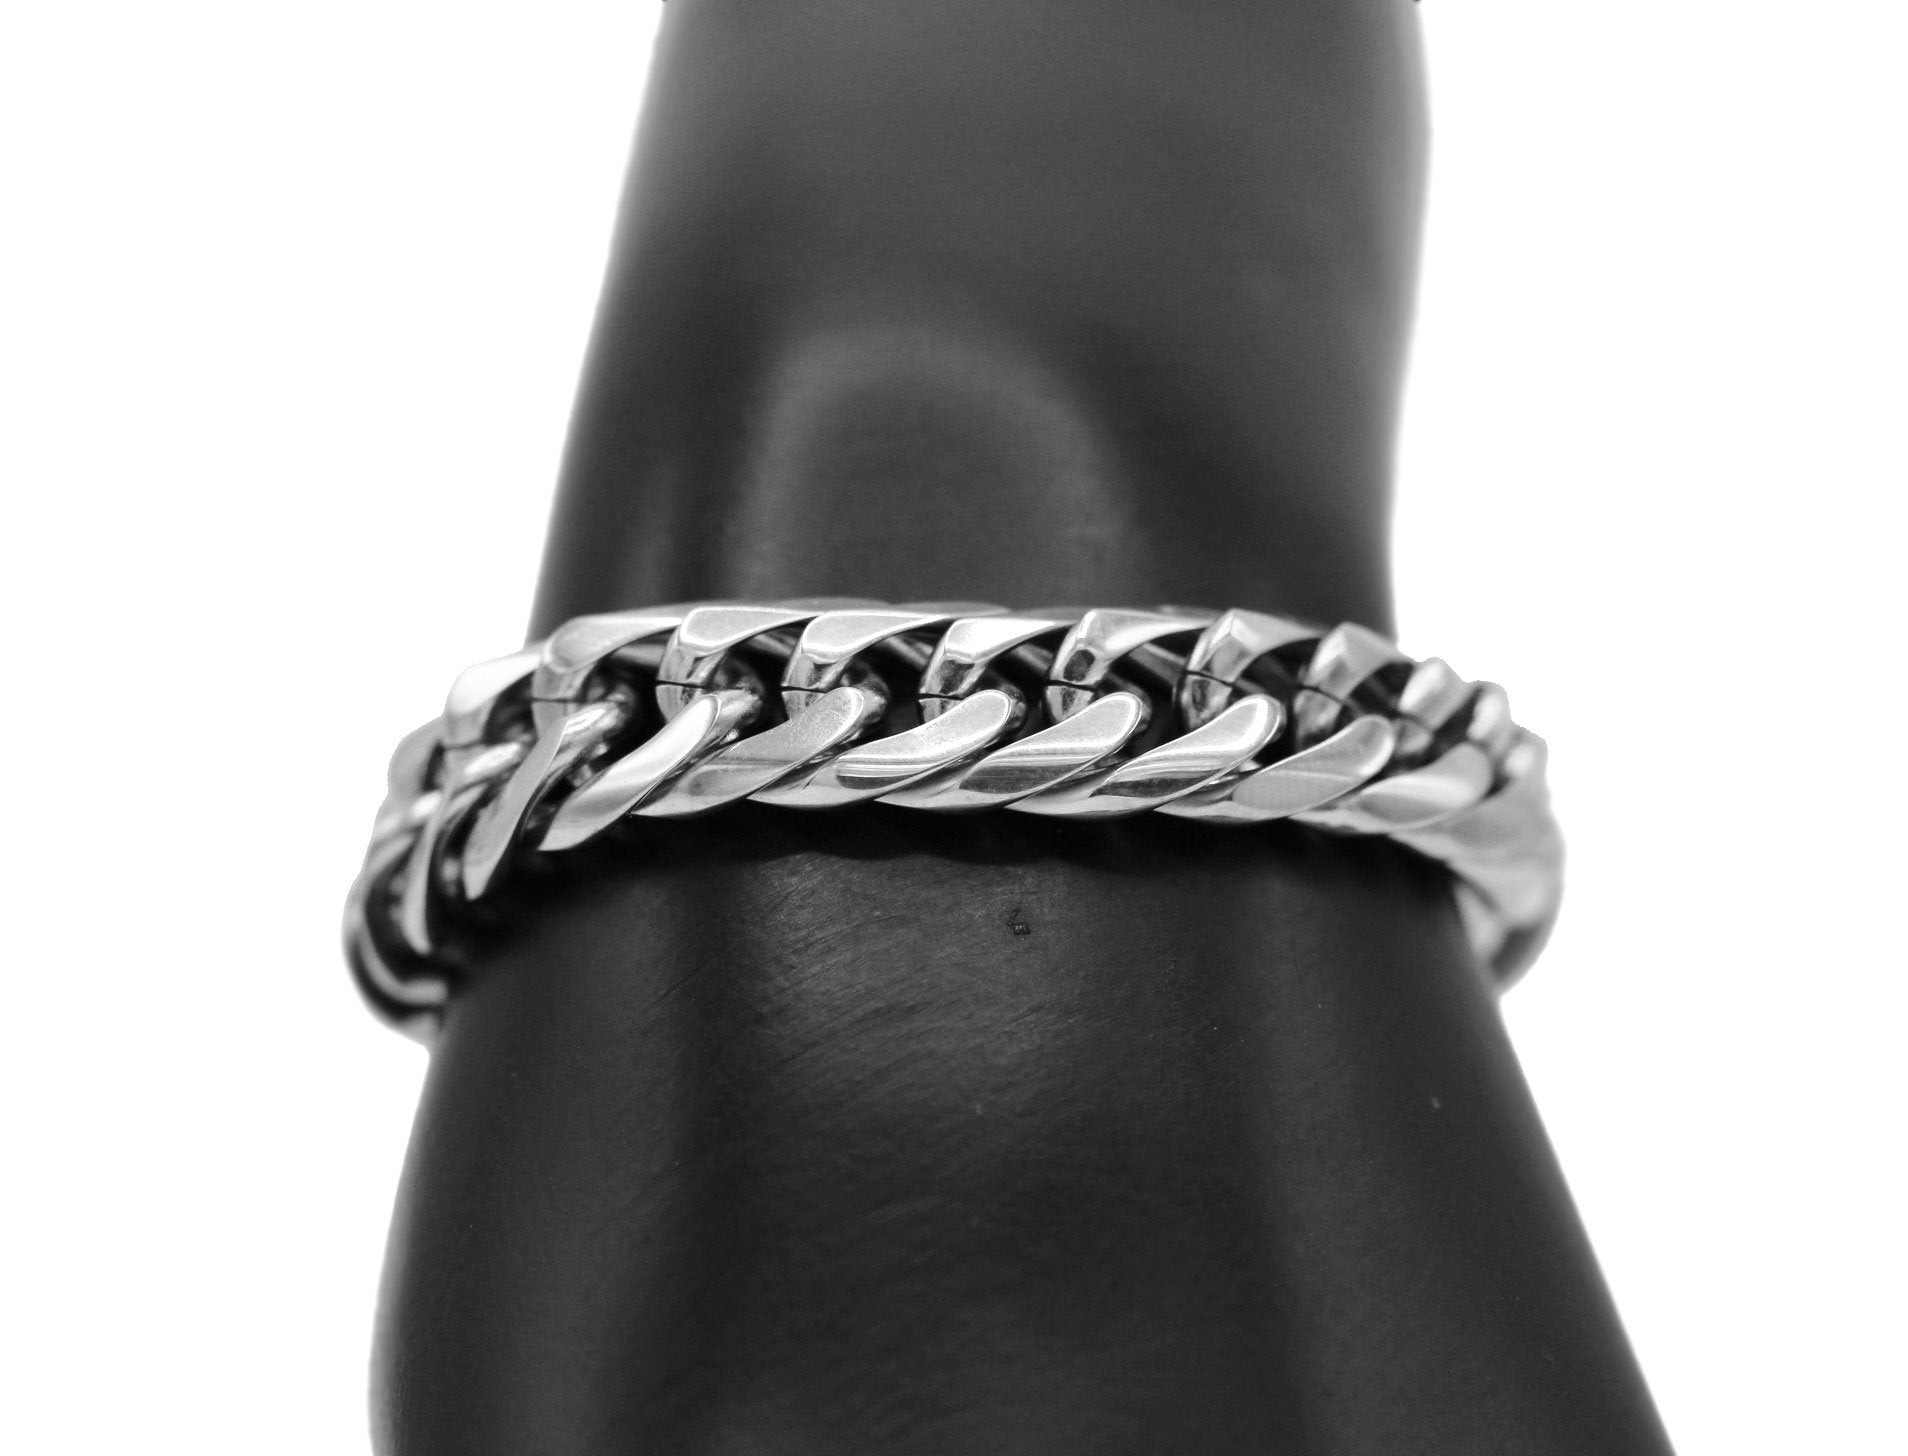 Curb Bracelet Chain for Men